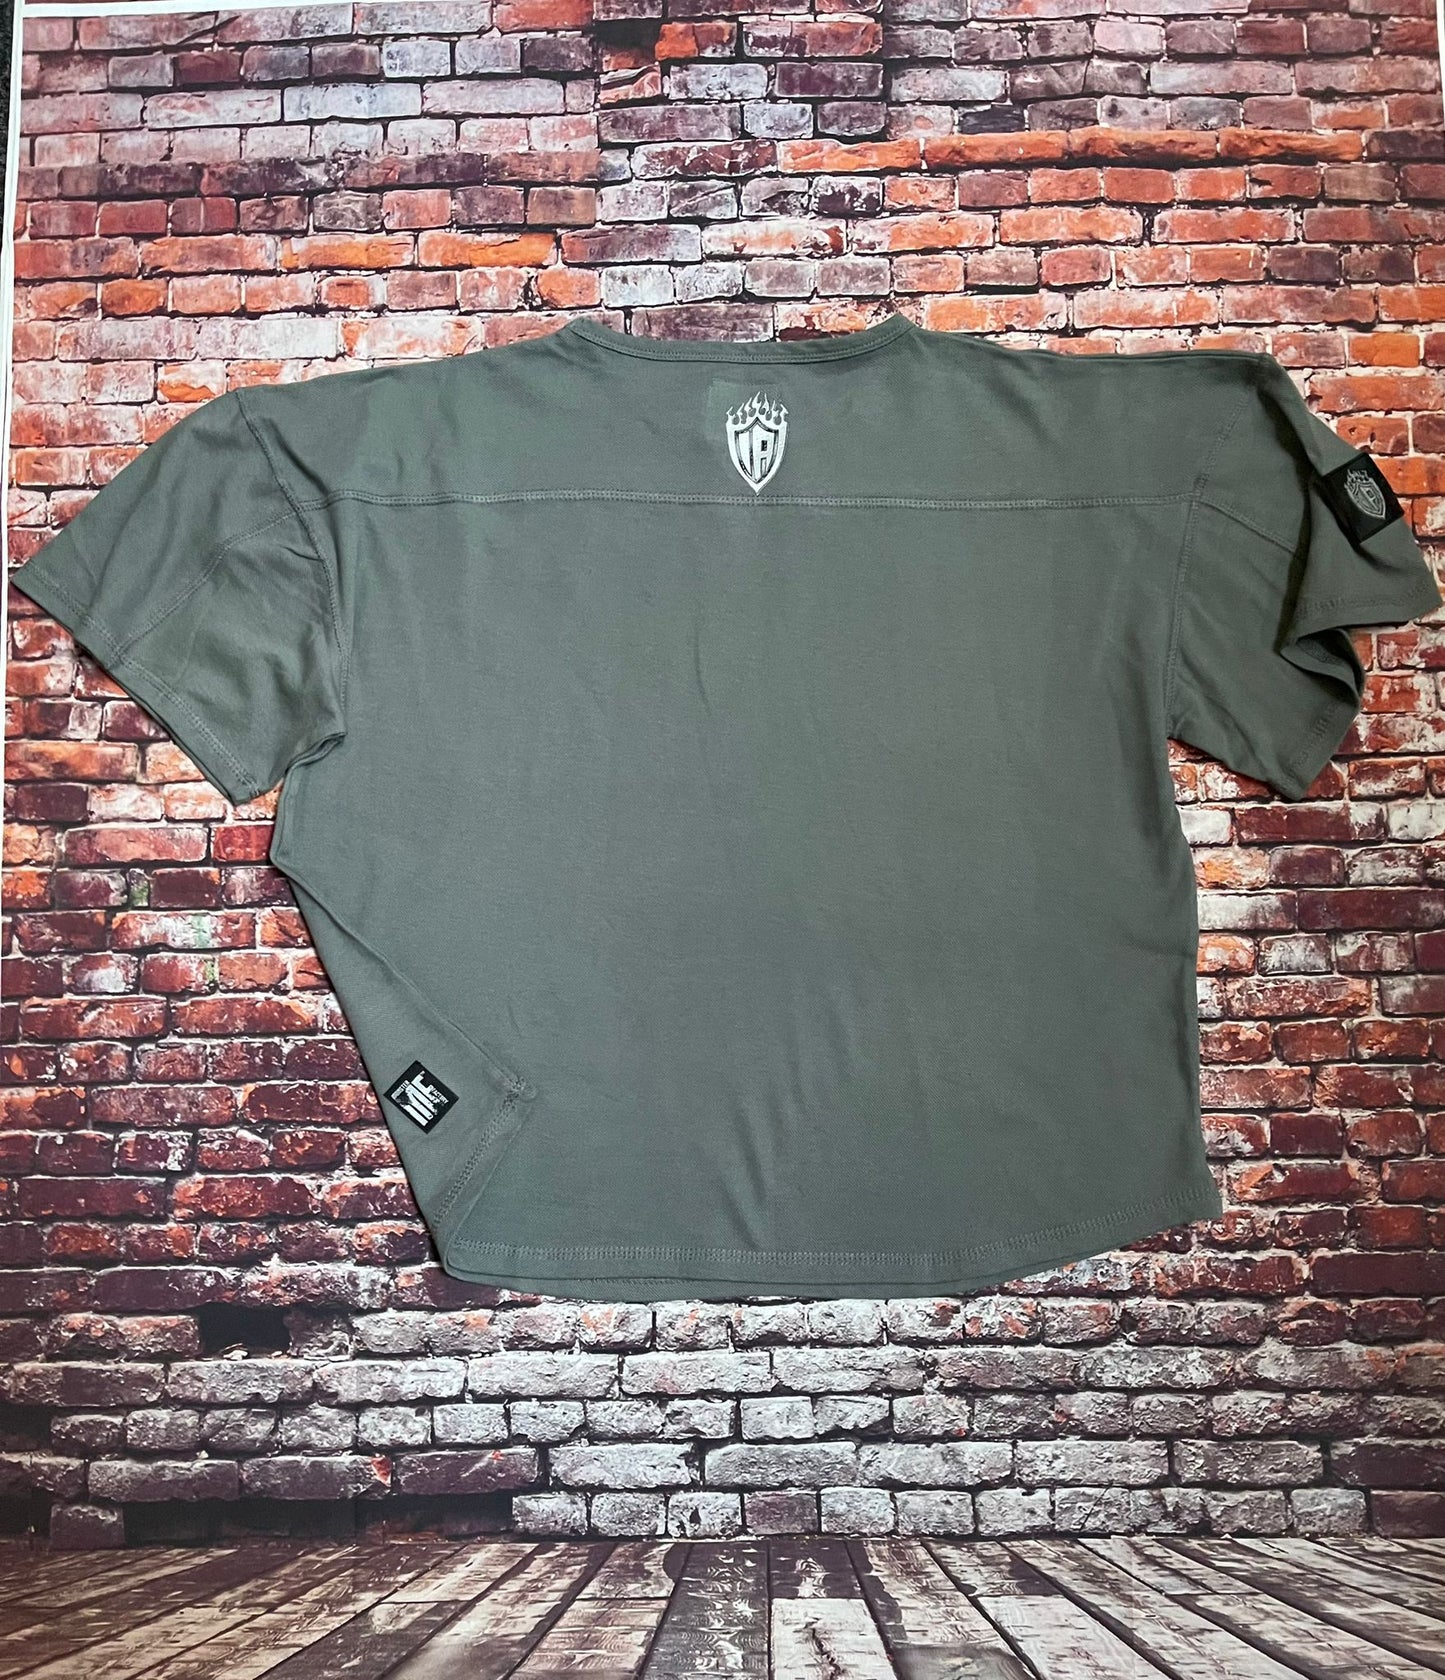 Iron Asylum Rag-Cut T-shirt